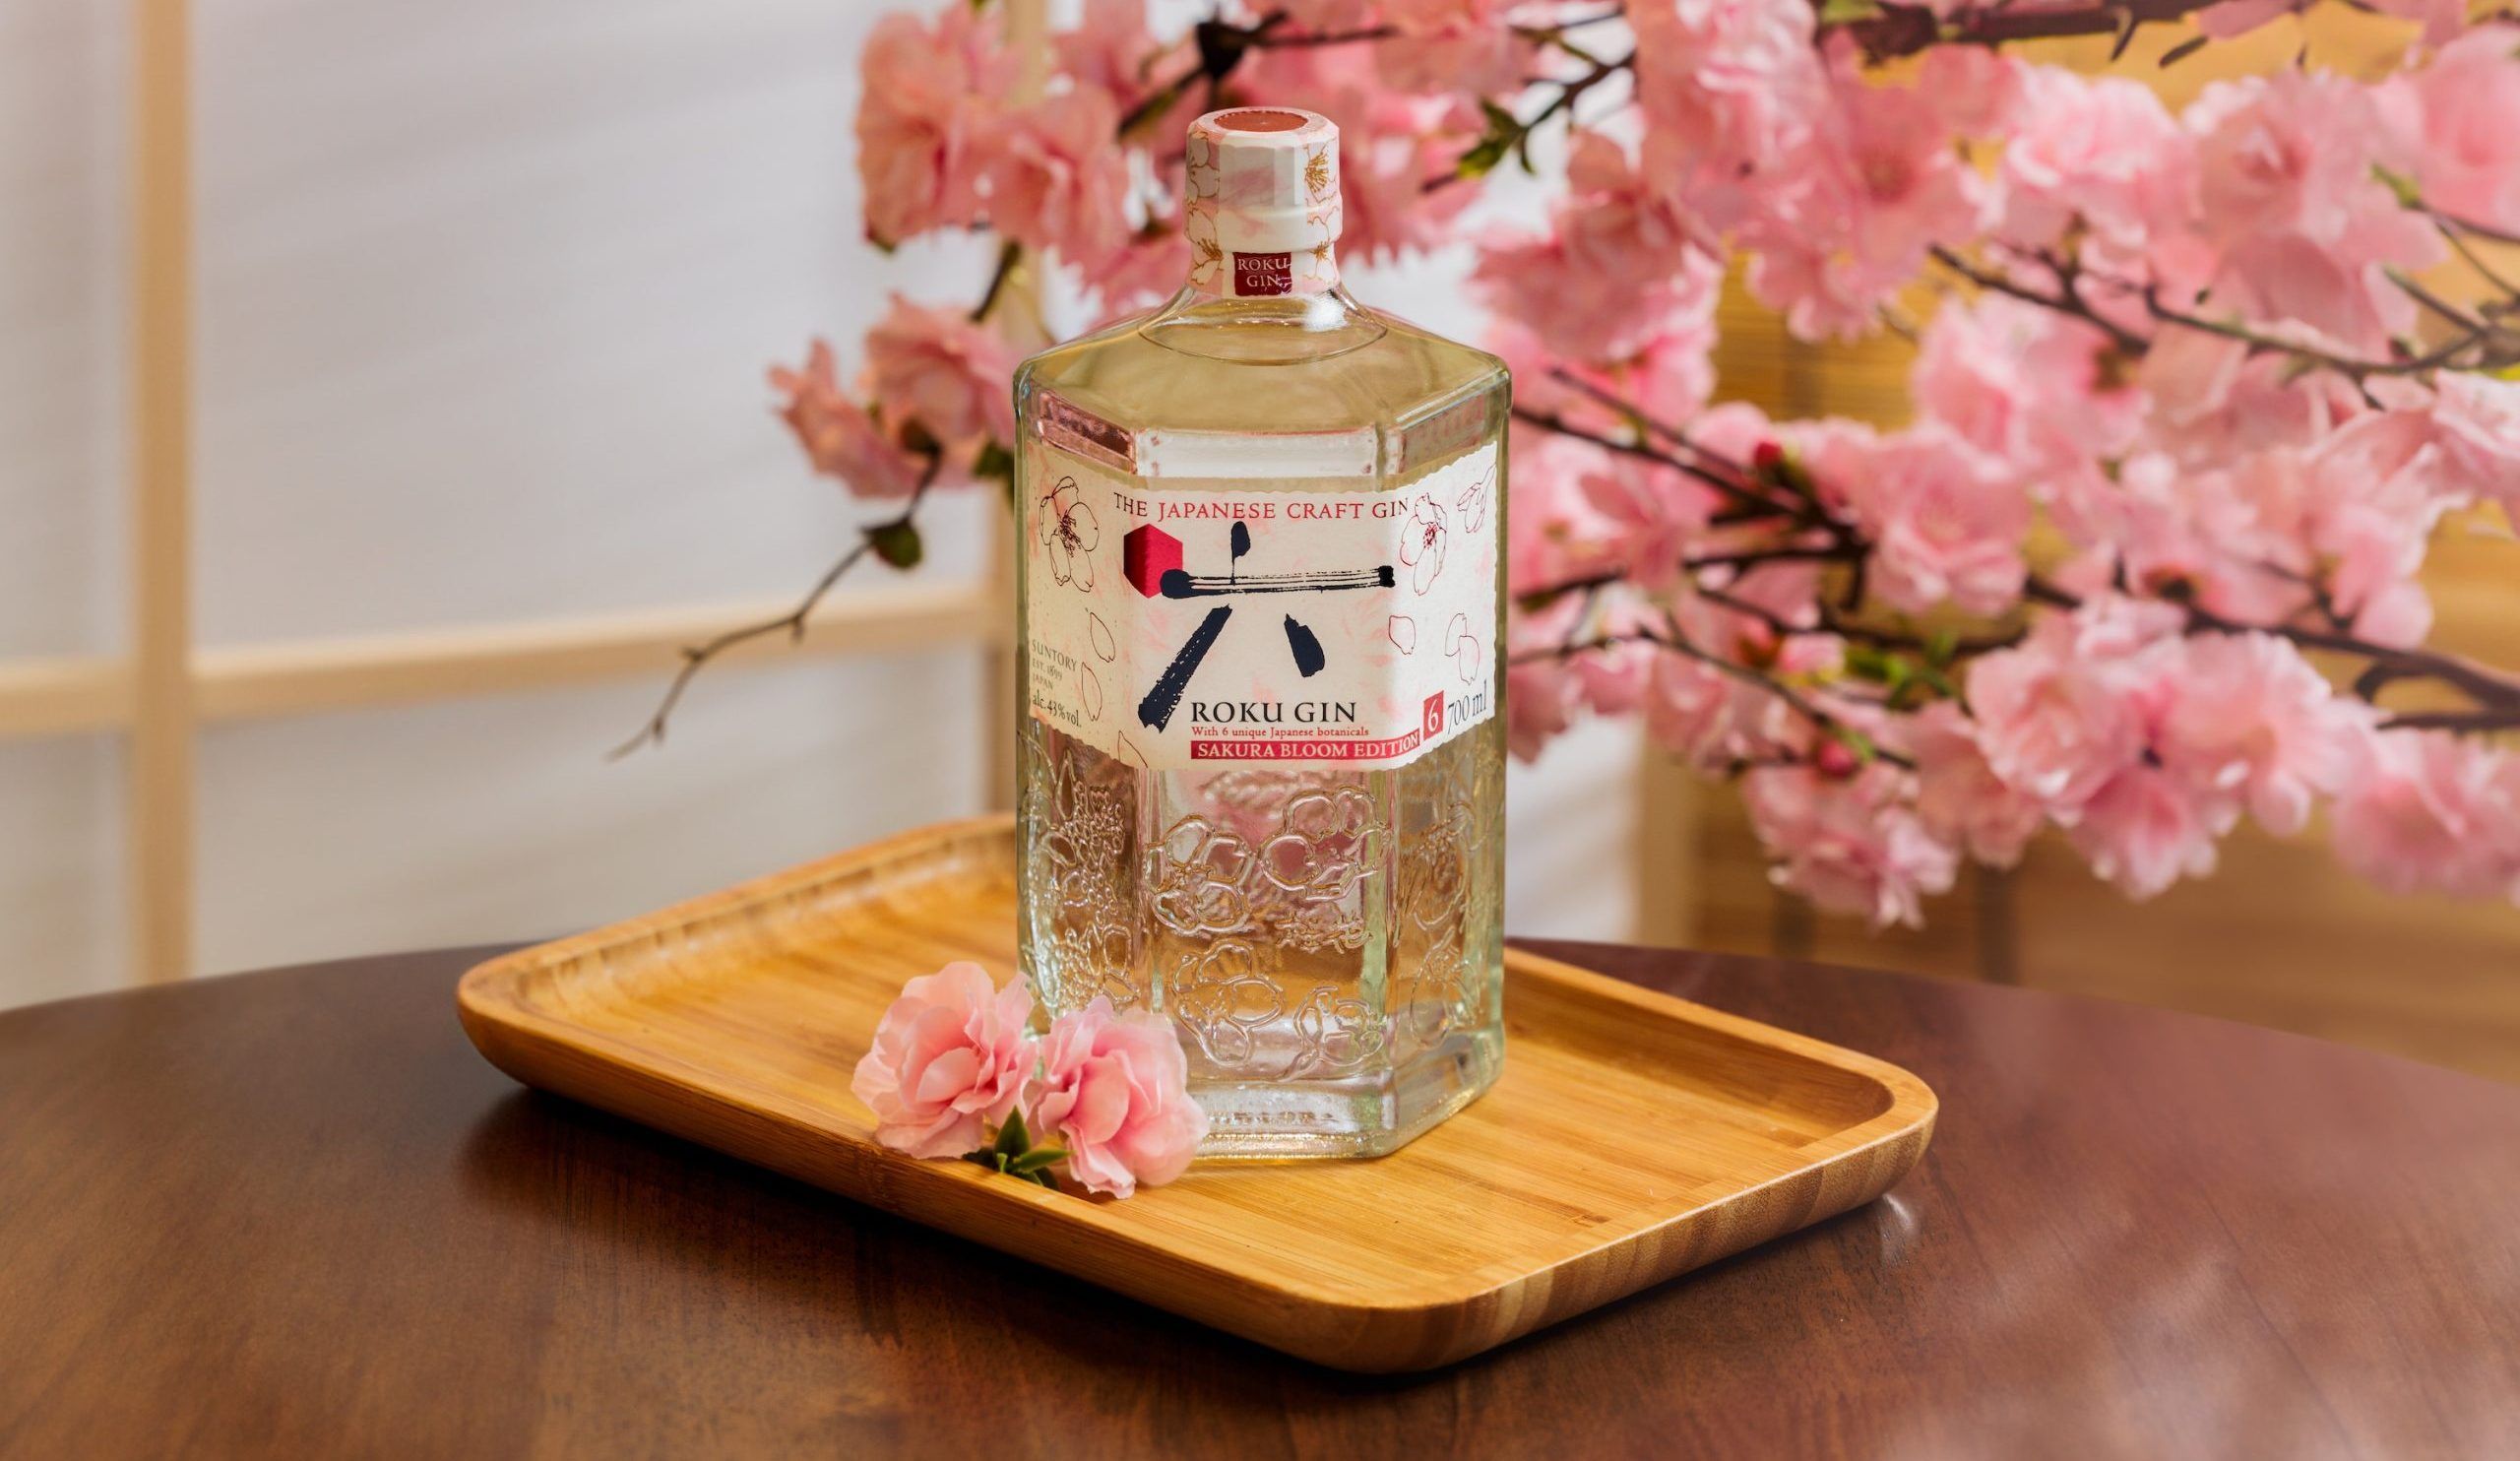 Roku Gin Sakura Bloom Edition is peak cherry blossom festival in Japan